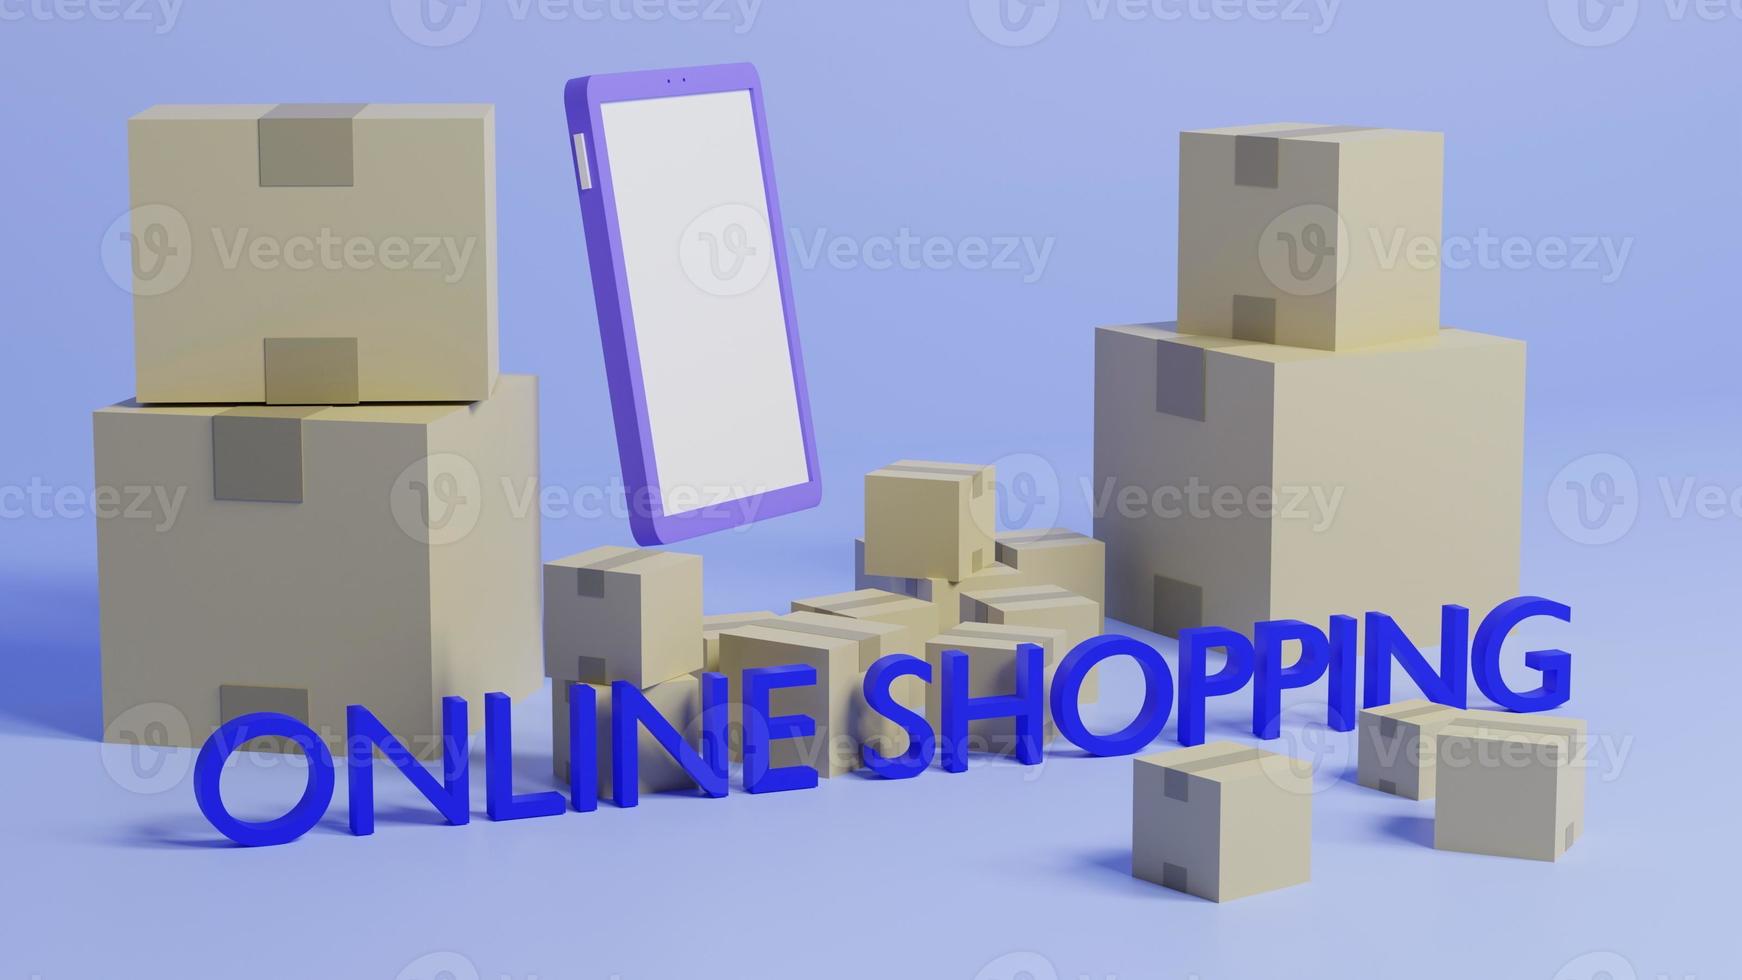 online shopping koncept, mobiltelefon och papperskartonger eller paket på blå bakgrund, 3d rendering. foto